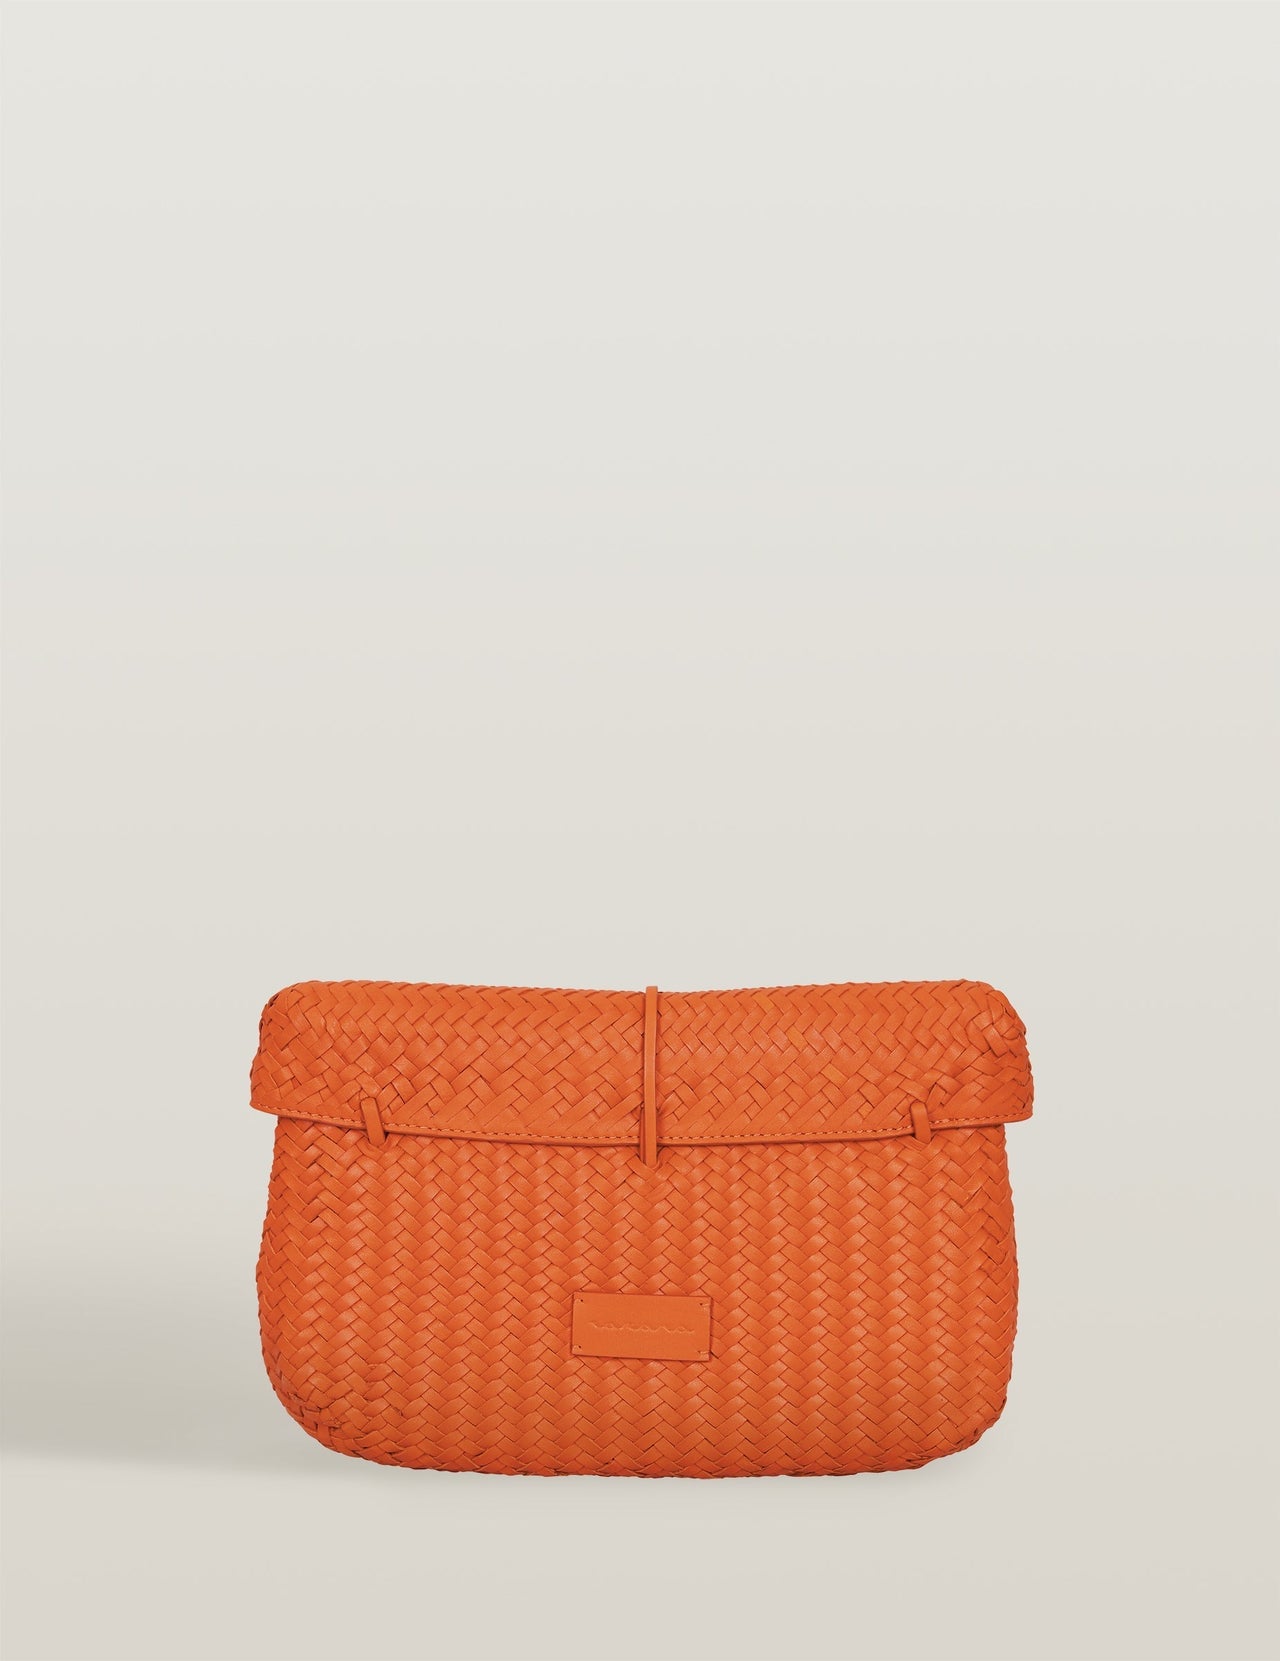  Orange Handwoven Leather Clutch Bag 